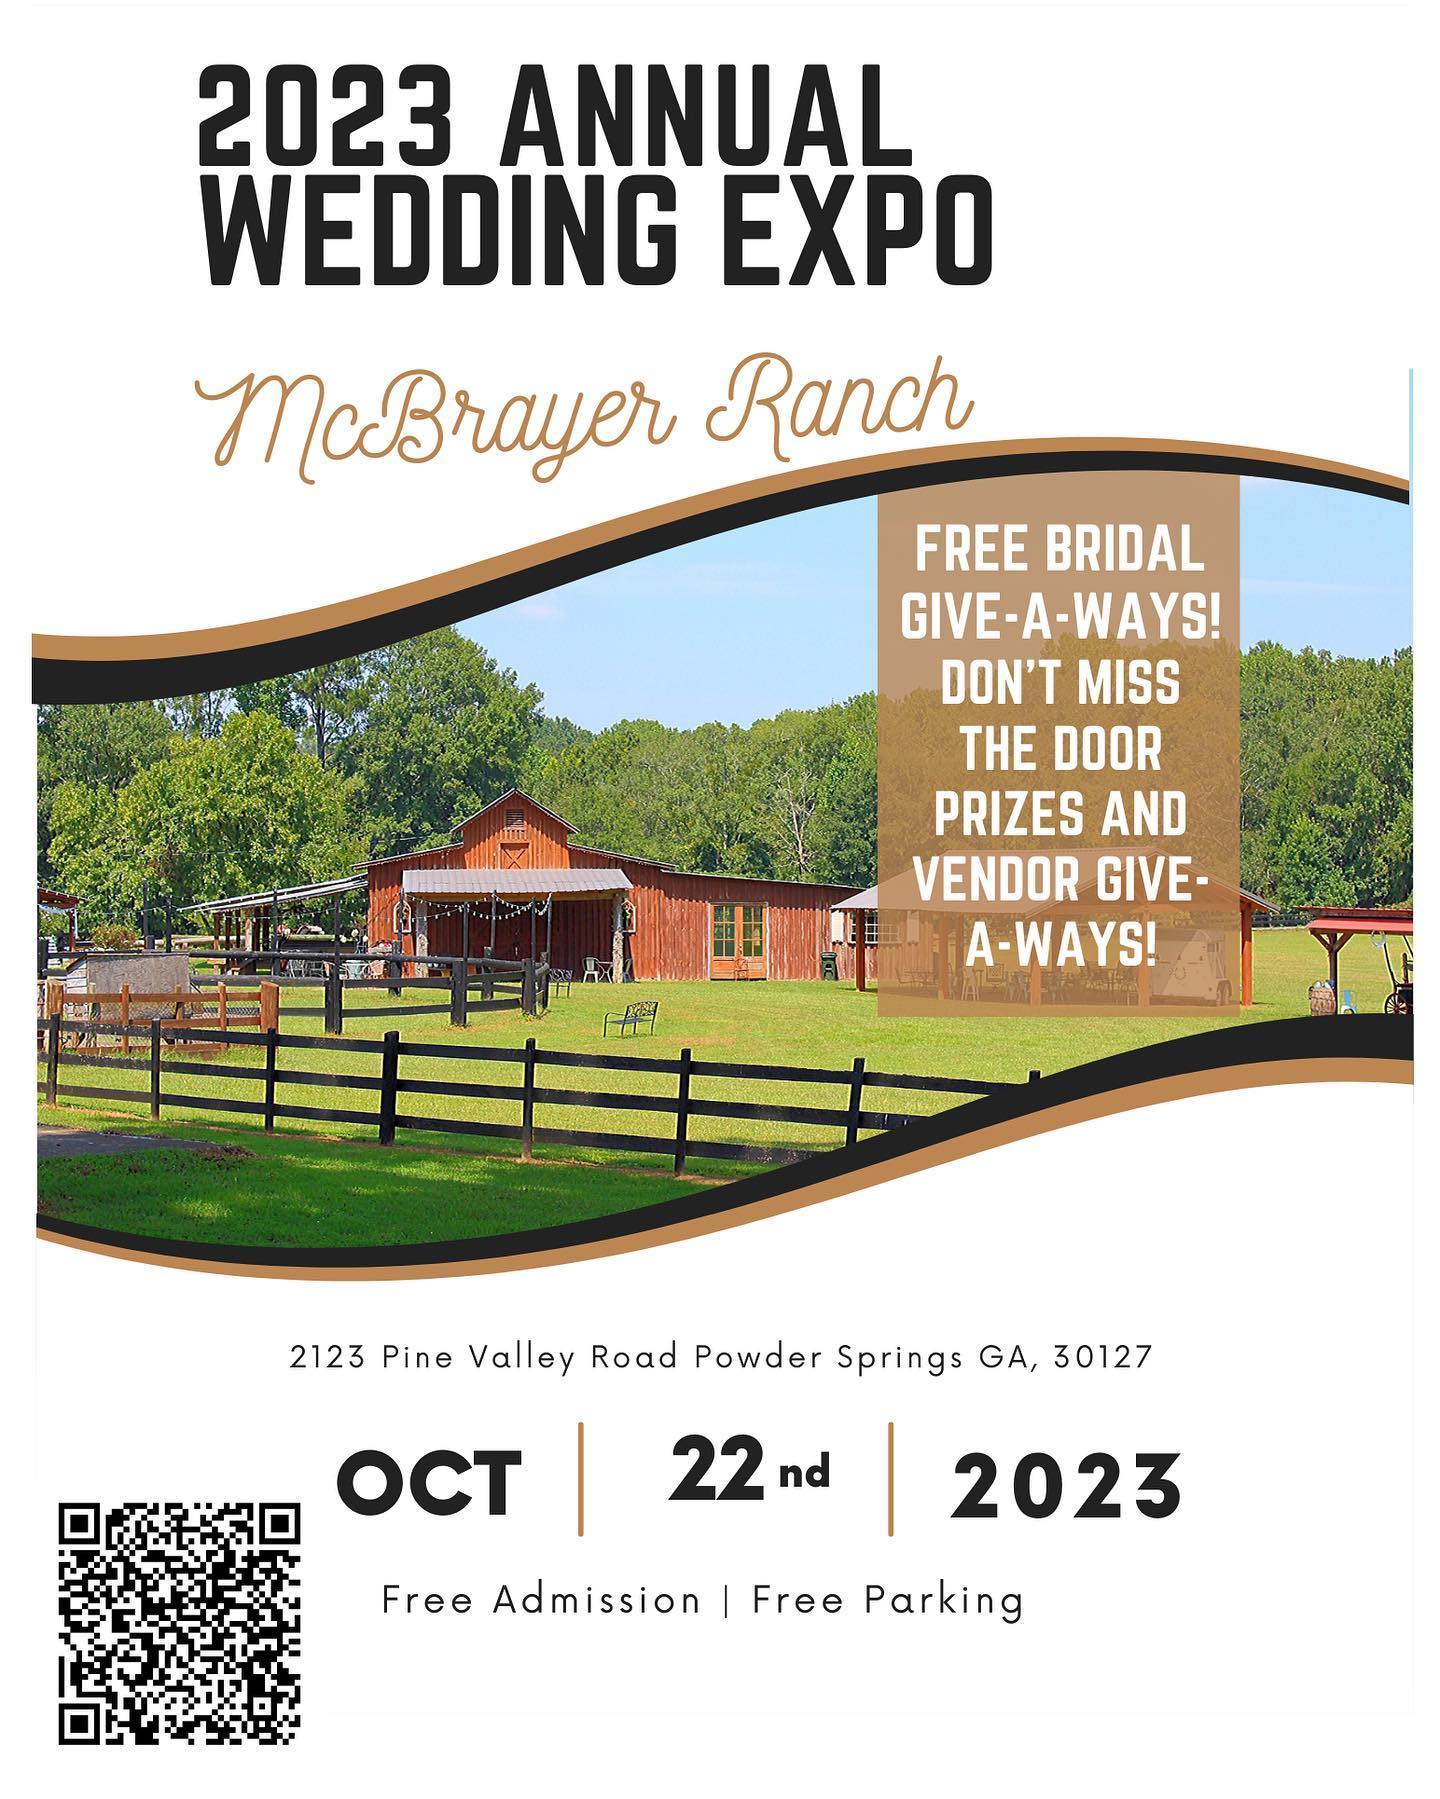 Image for post: McBrayer Ranch 2023 Annual Wedding Expo